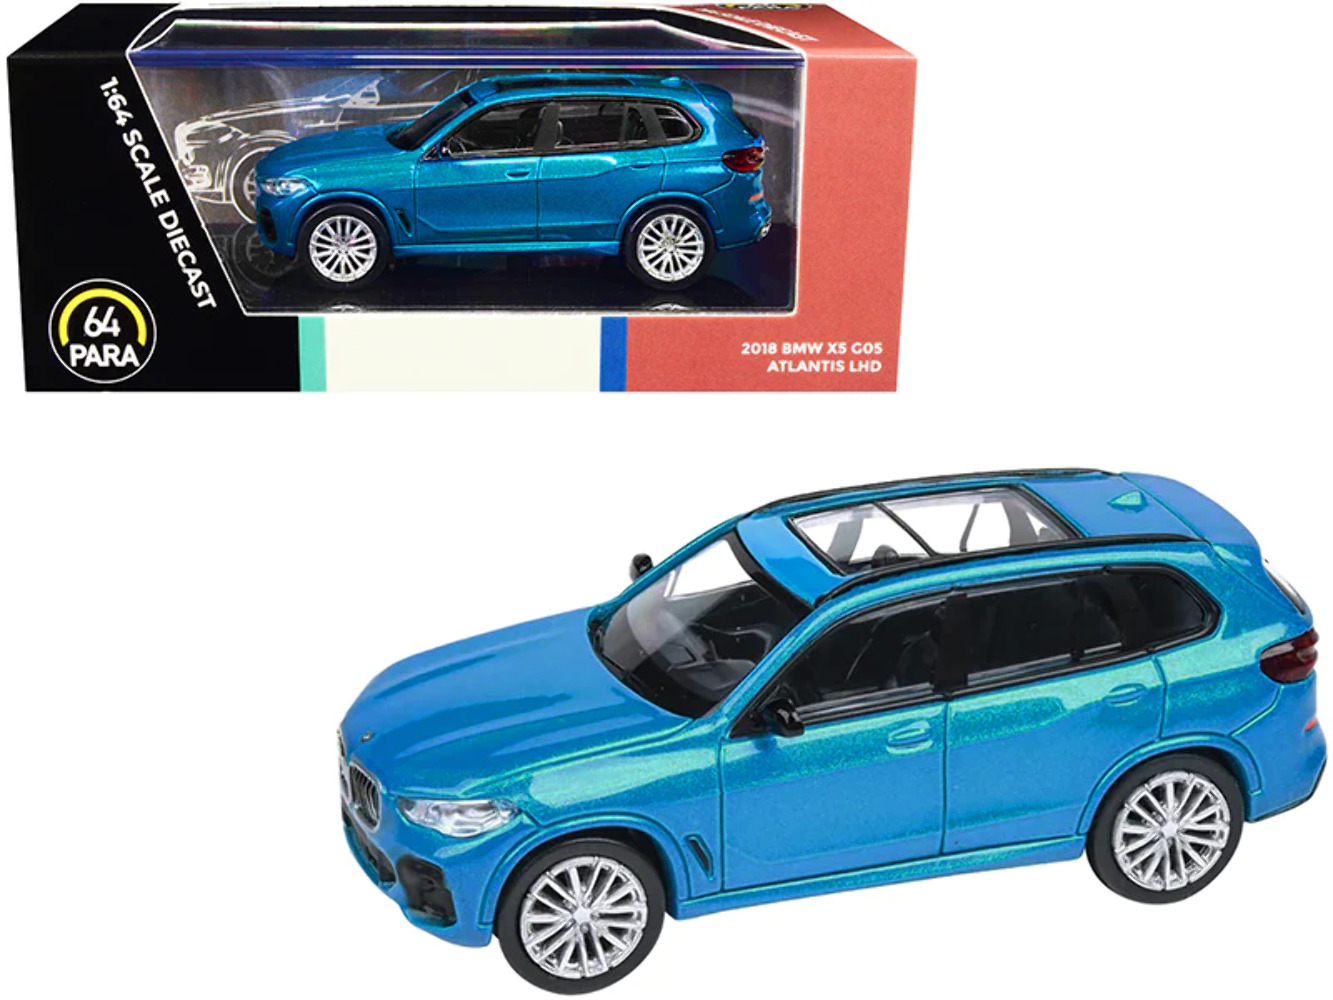 2018 BMW X5 G05 with Sunroof Atlantis Blue Metallic 1/64 Diecast Model Car